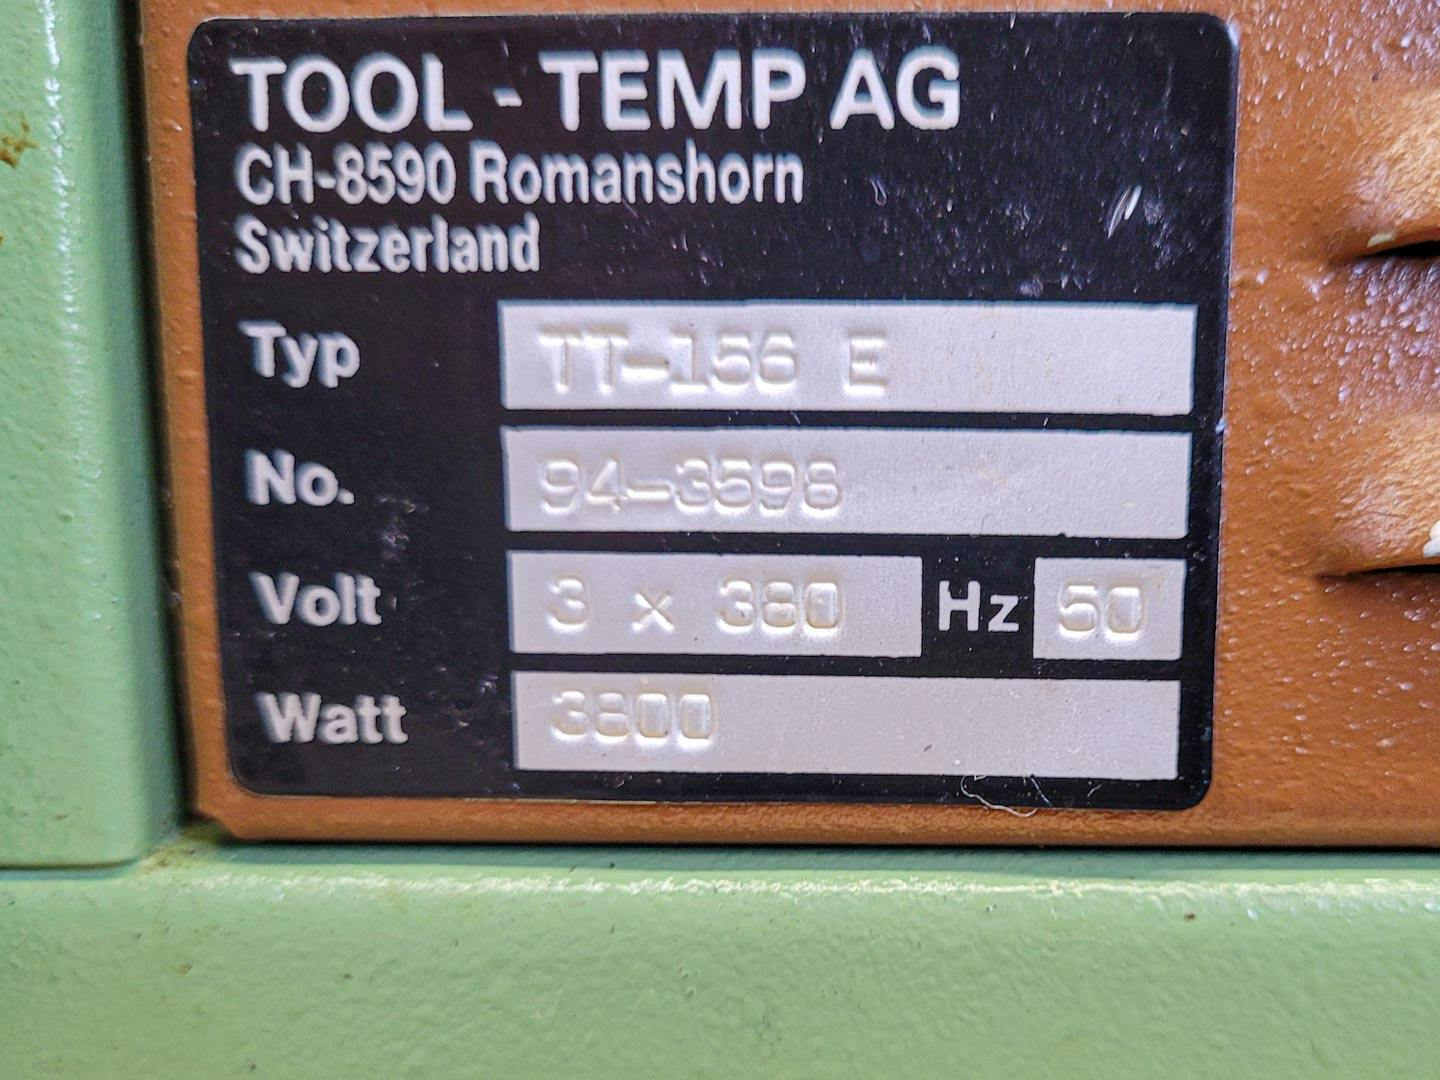 Tool-temp TT-156E - Atemperador - image 8